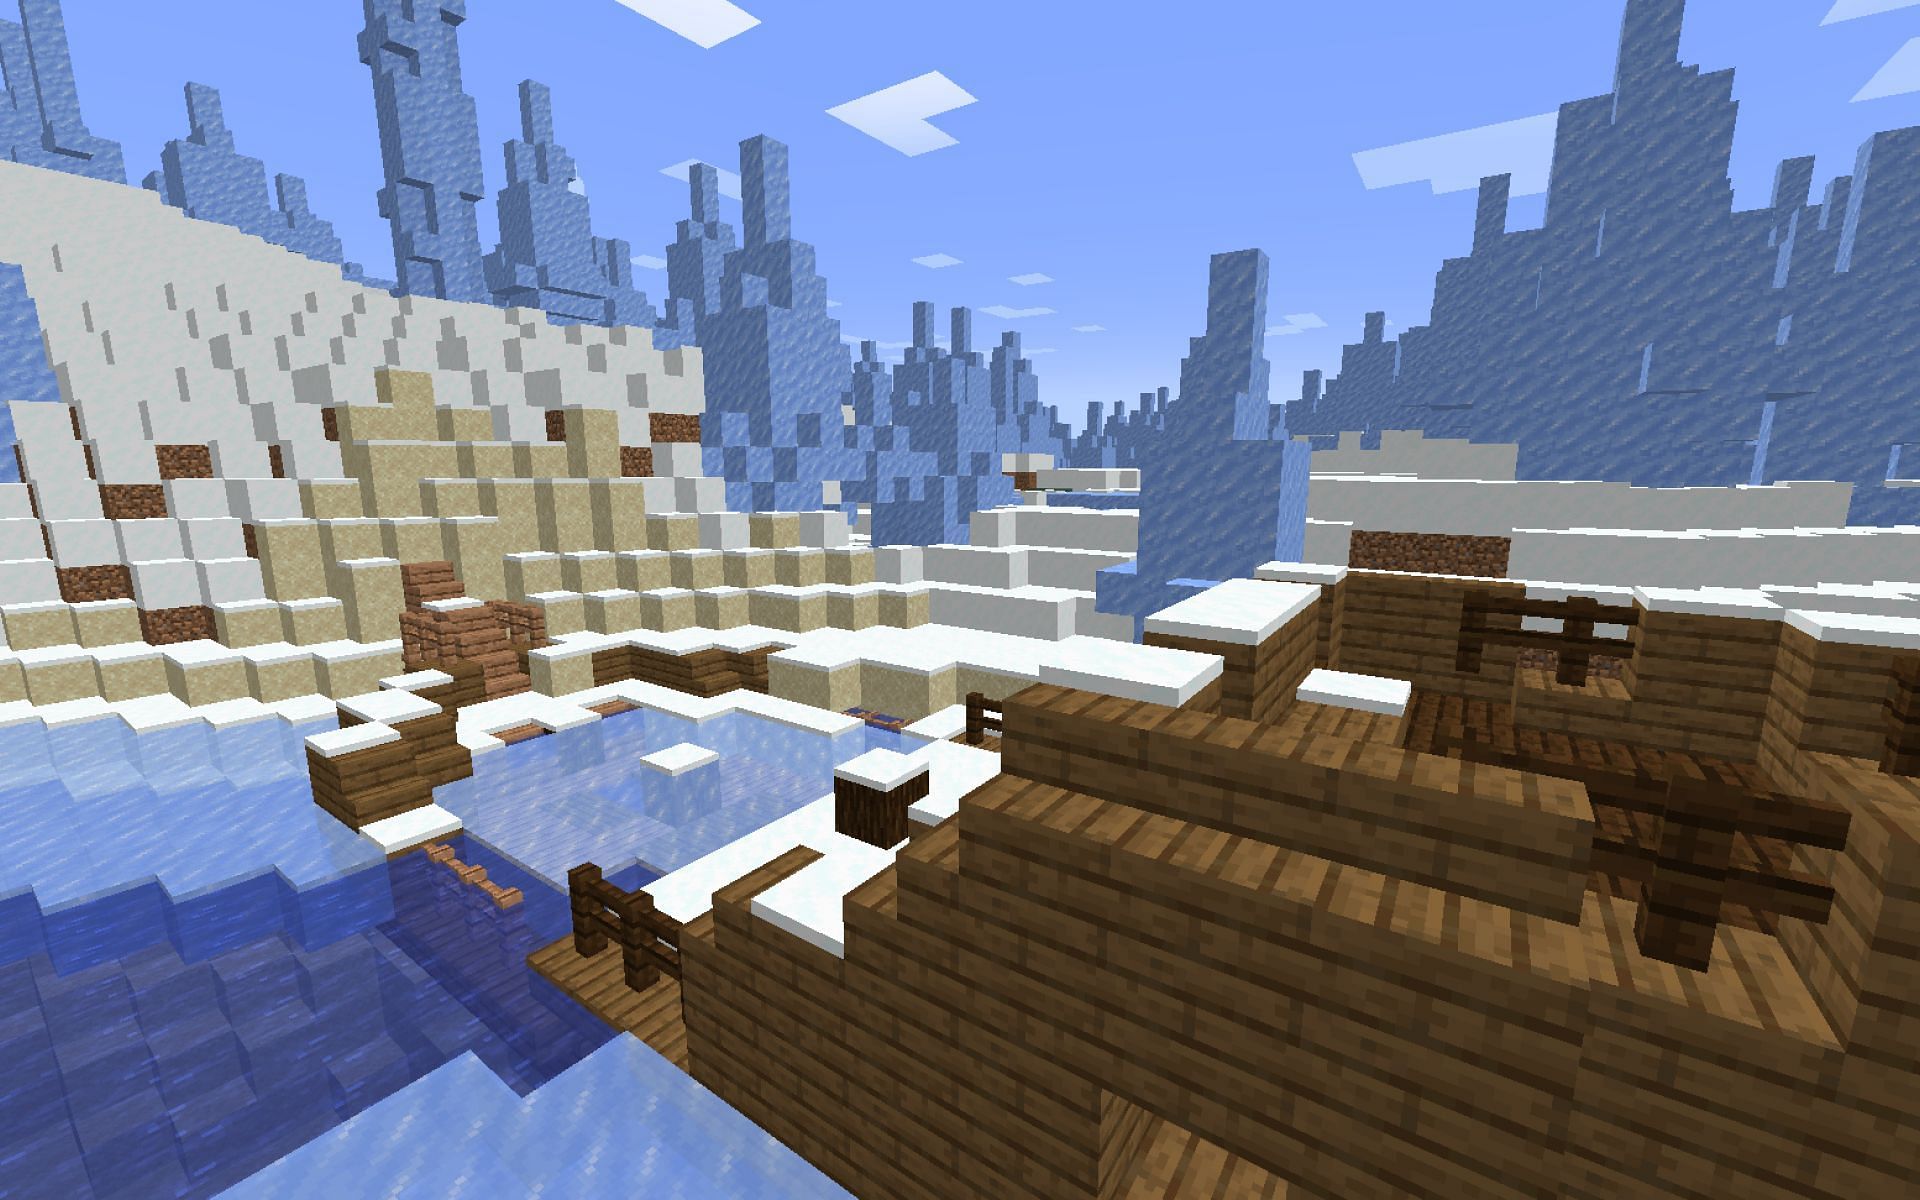 An image of a shipwreck in-game. (Image via Mojang).